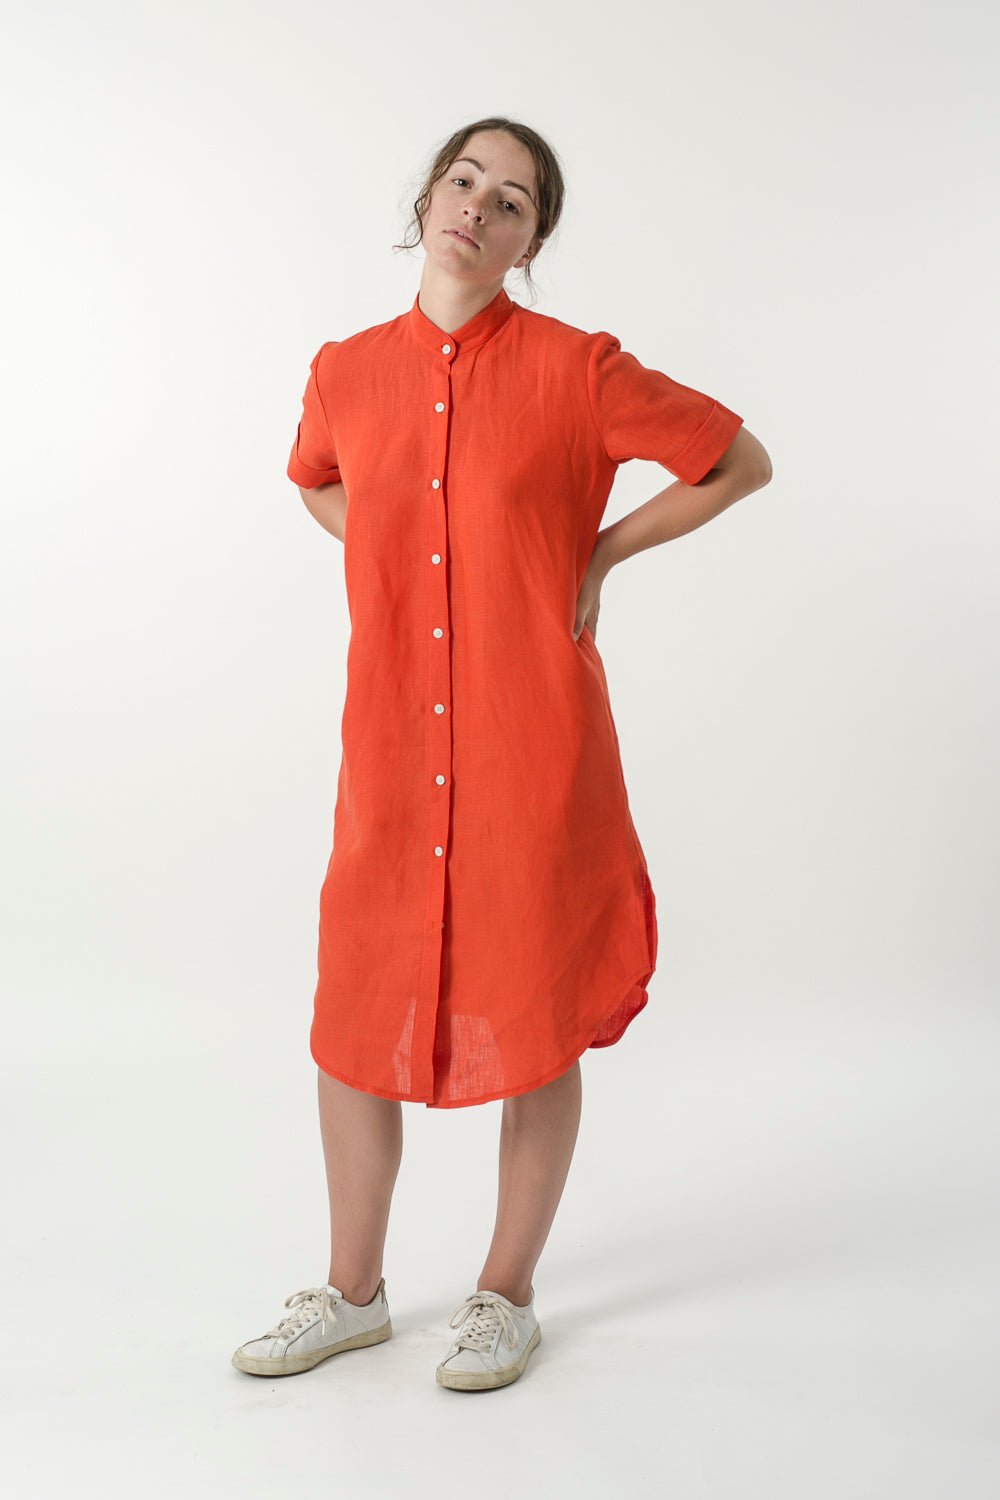 Hemp Linen Short Sleeve Shirtdress - Ensemble Studios